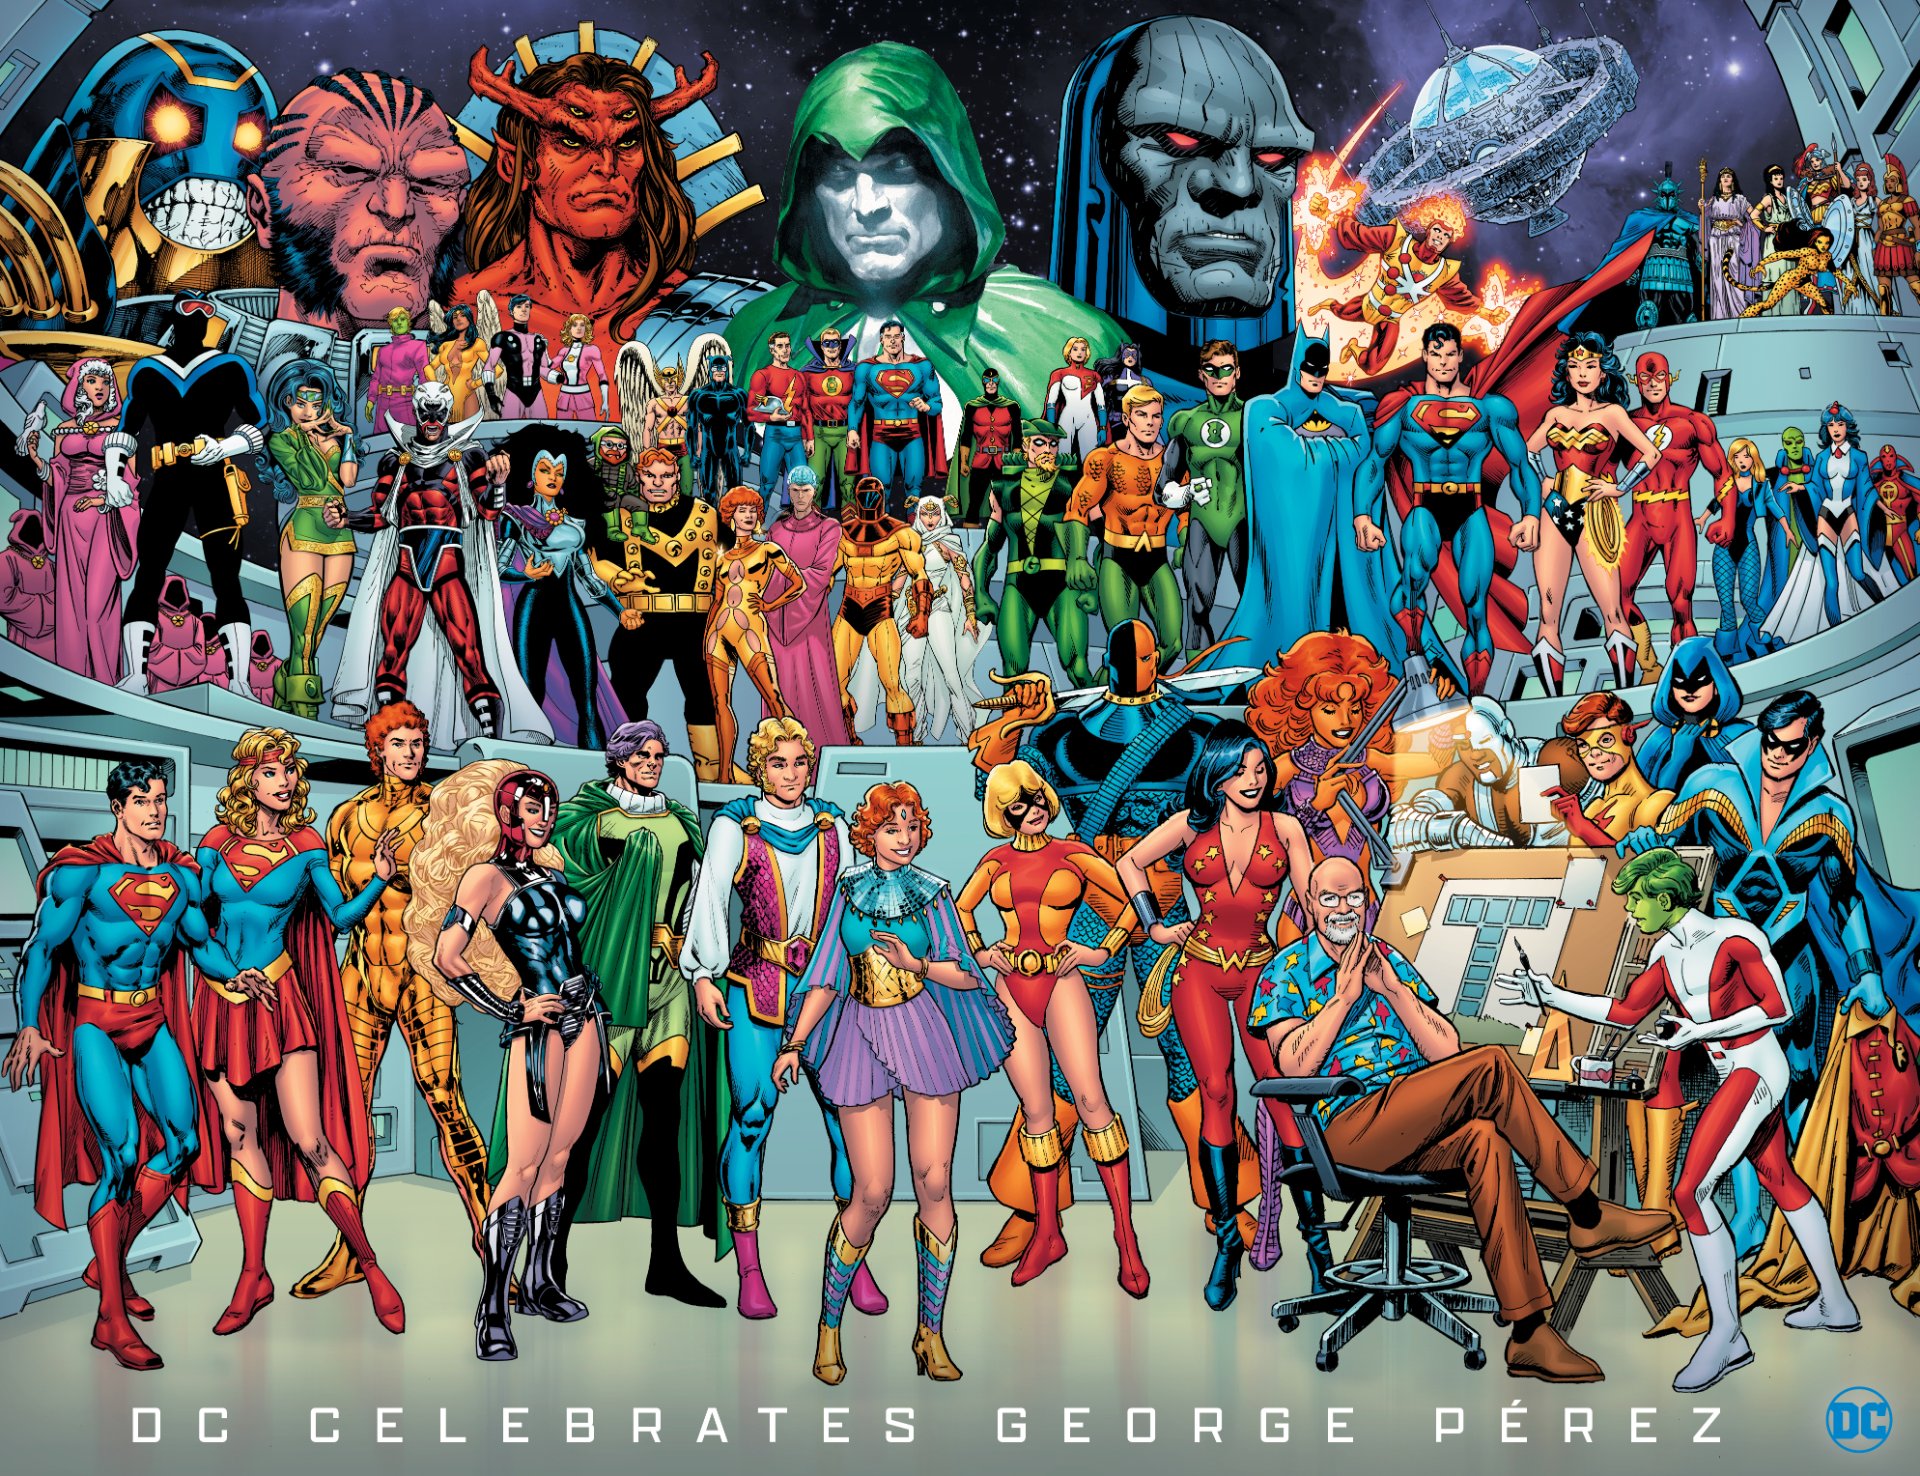 DC's Birthday Tribute to George Perez